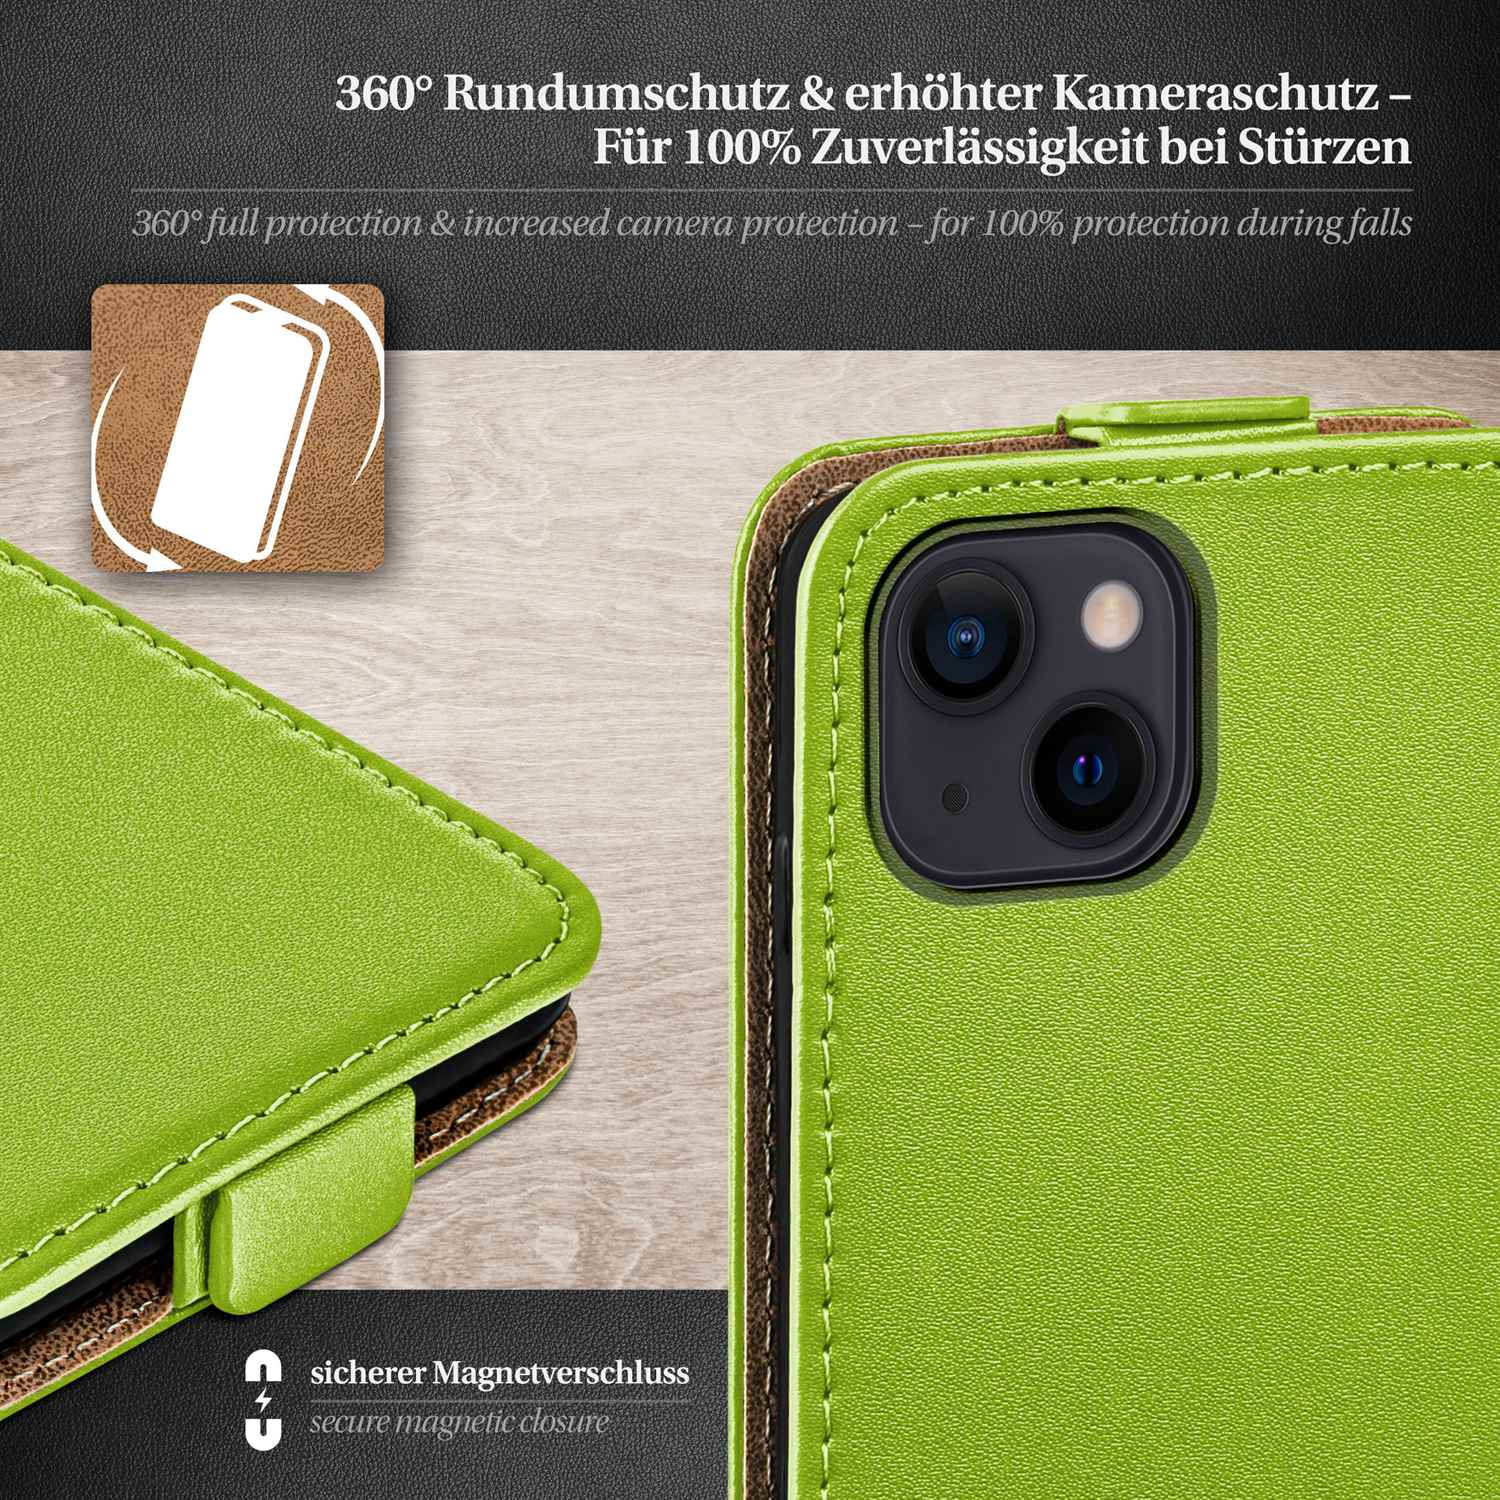 MOEX Flip Case, Flip Cover, 13 iPhone Lime-Green mini, Apple